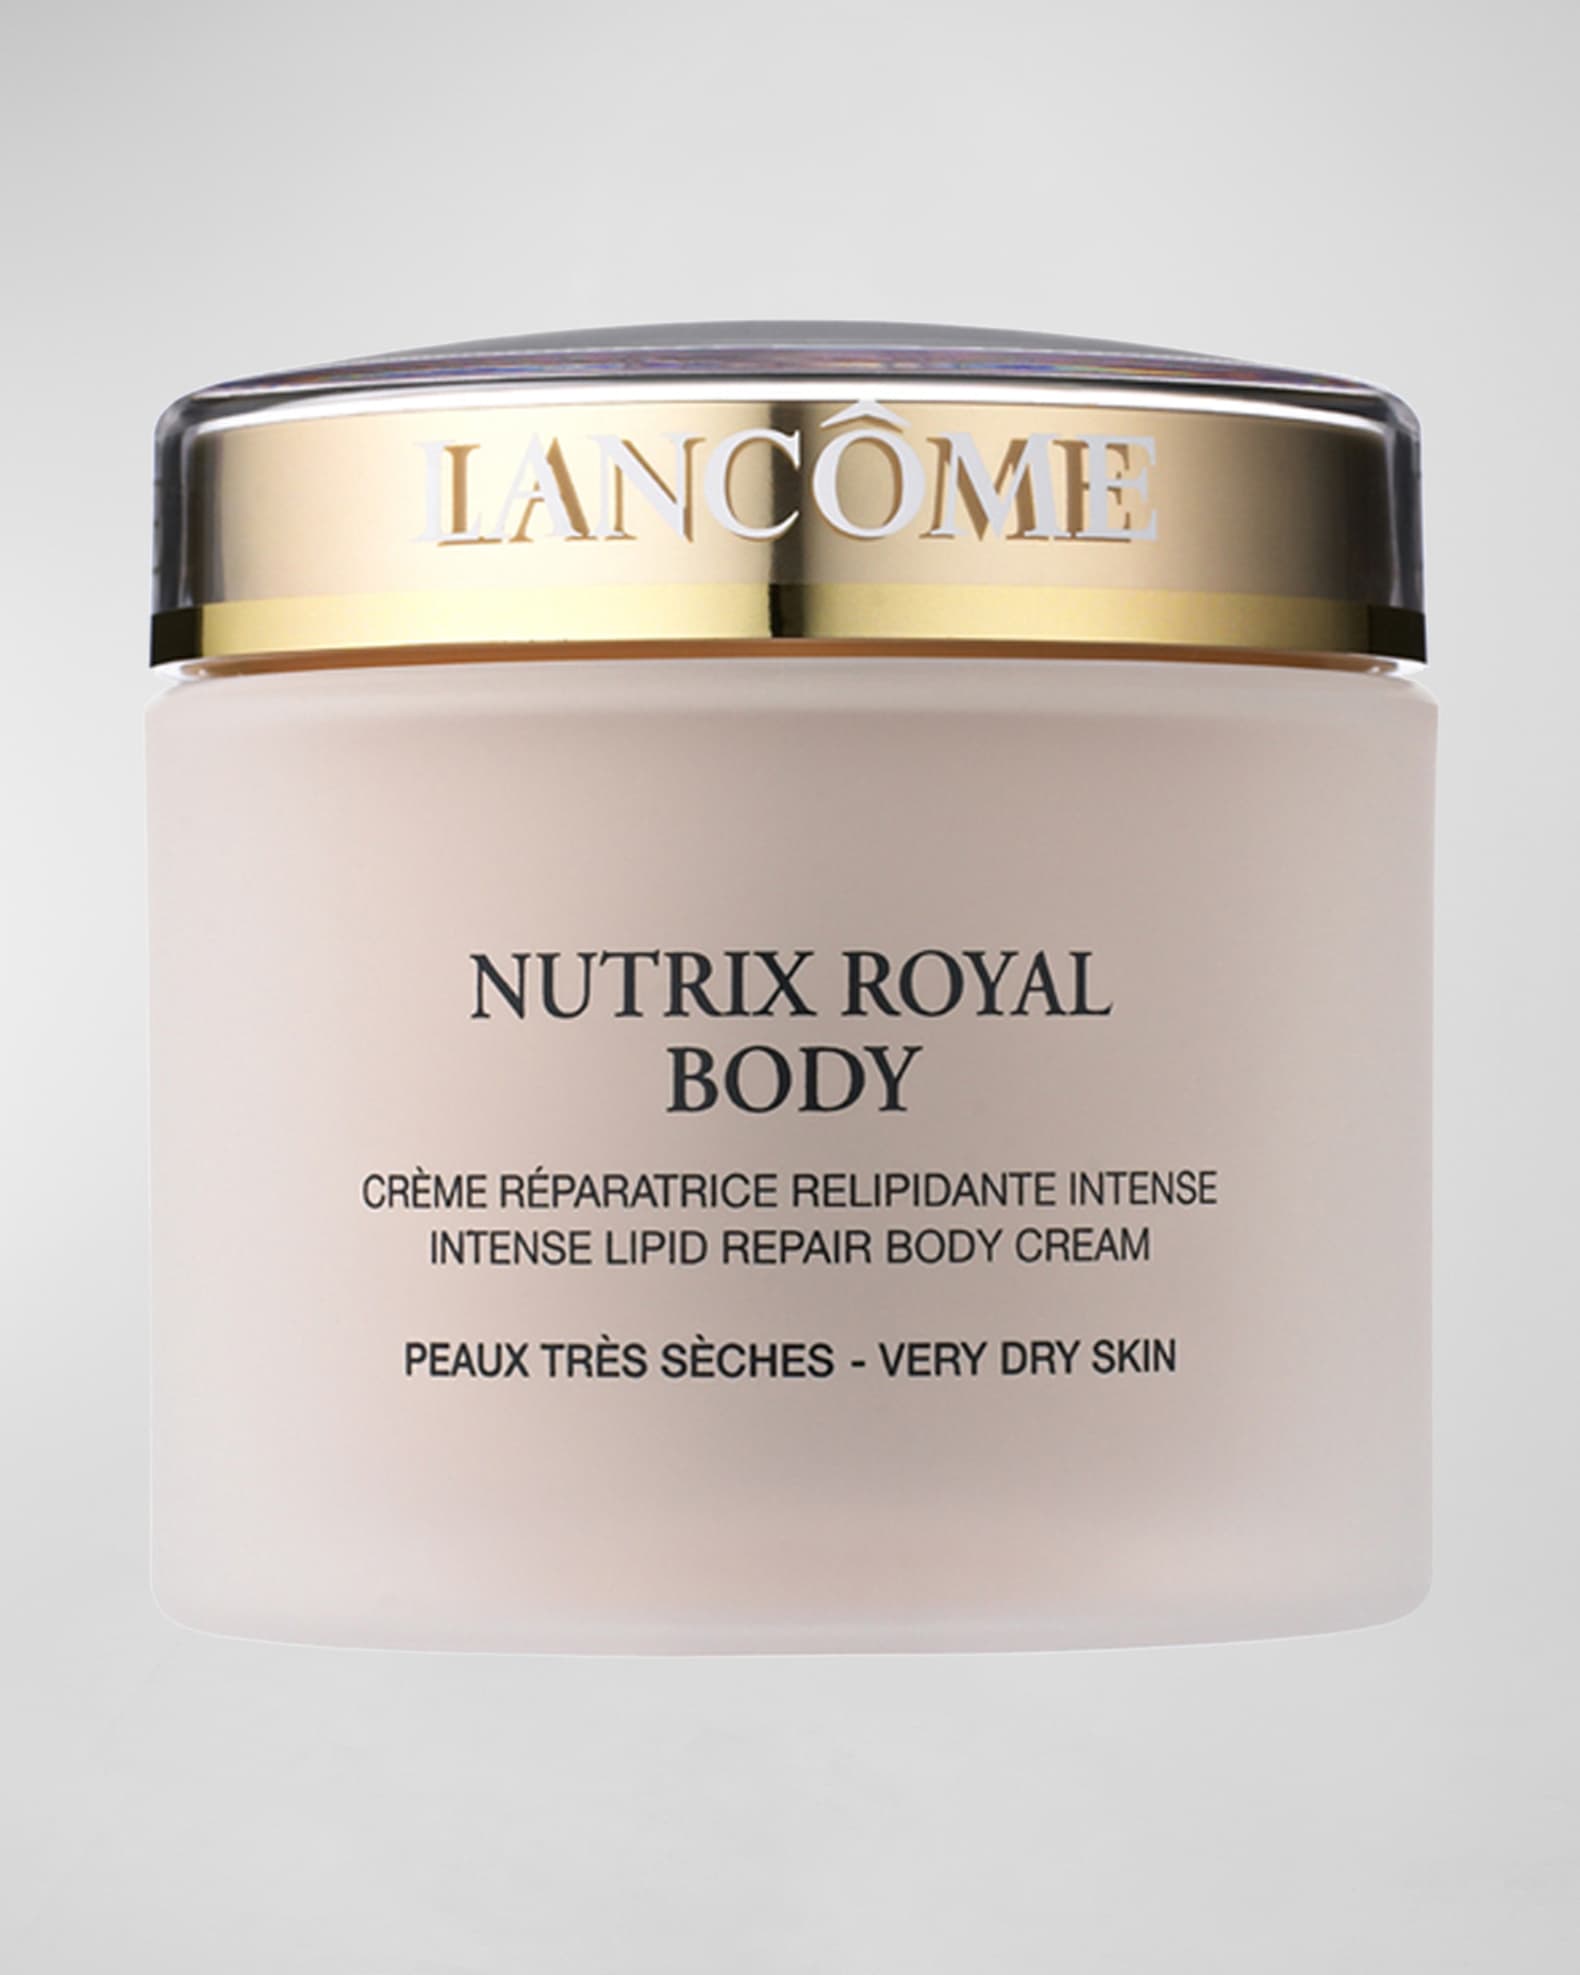 Marcus Restoring Nutrix Lancome Lipid-Enriched Lotion Body Intense Neiman Royal |